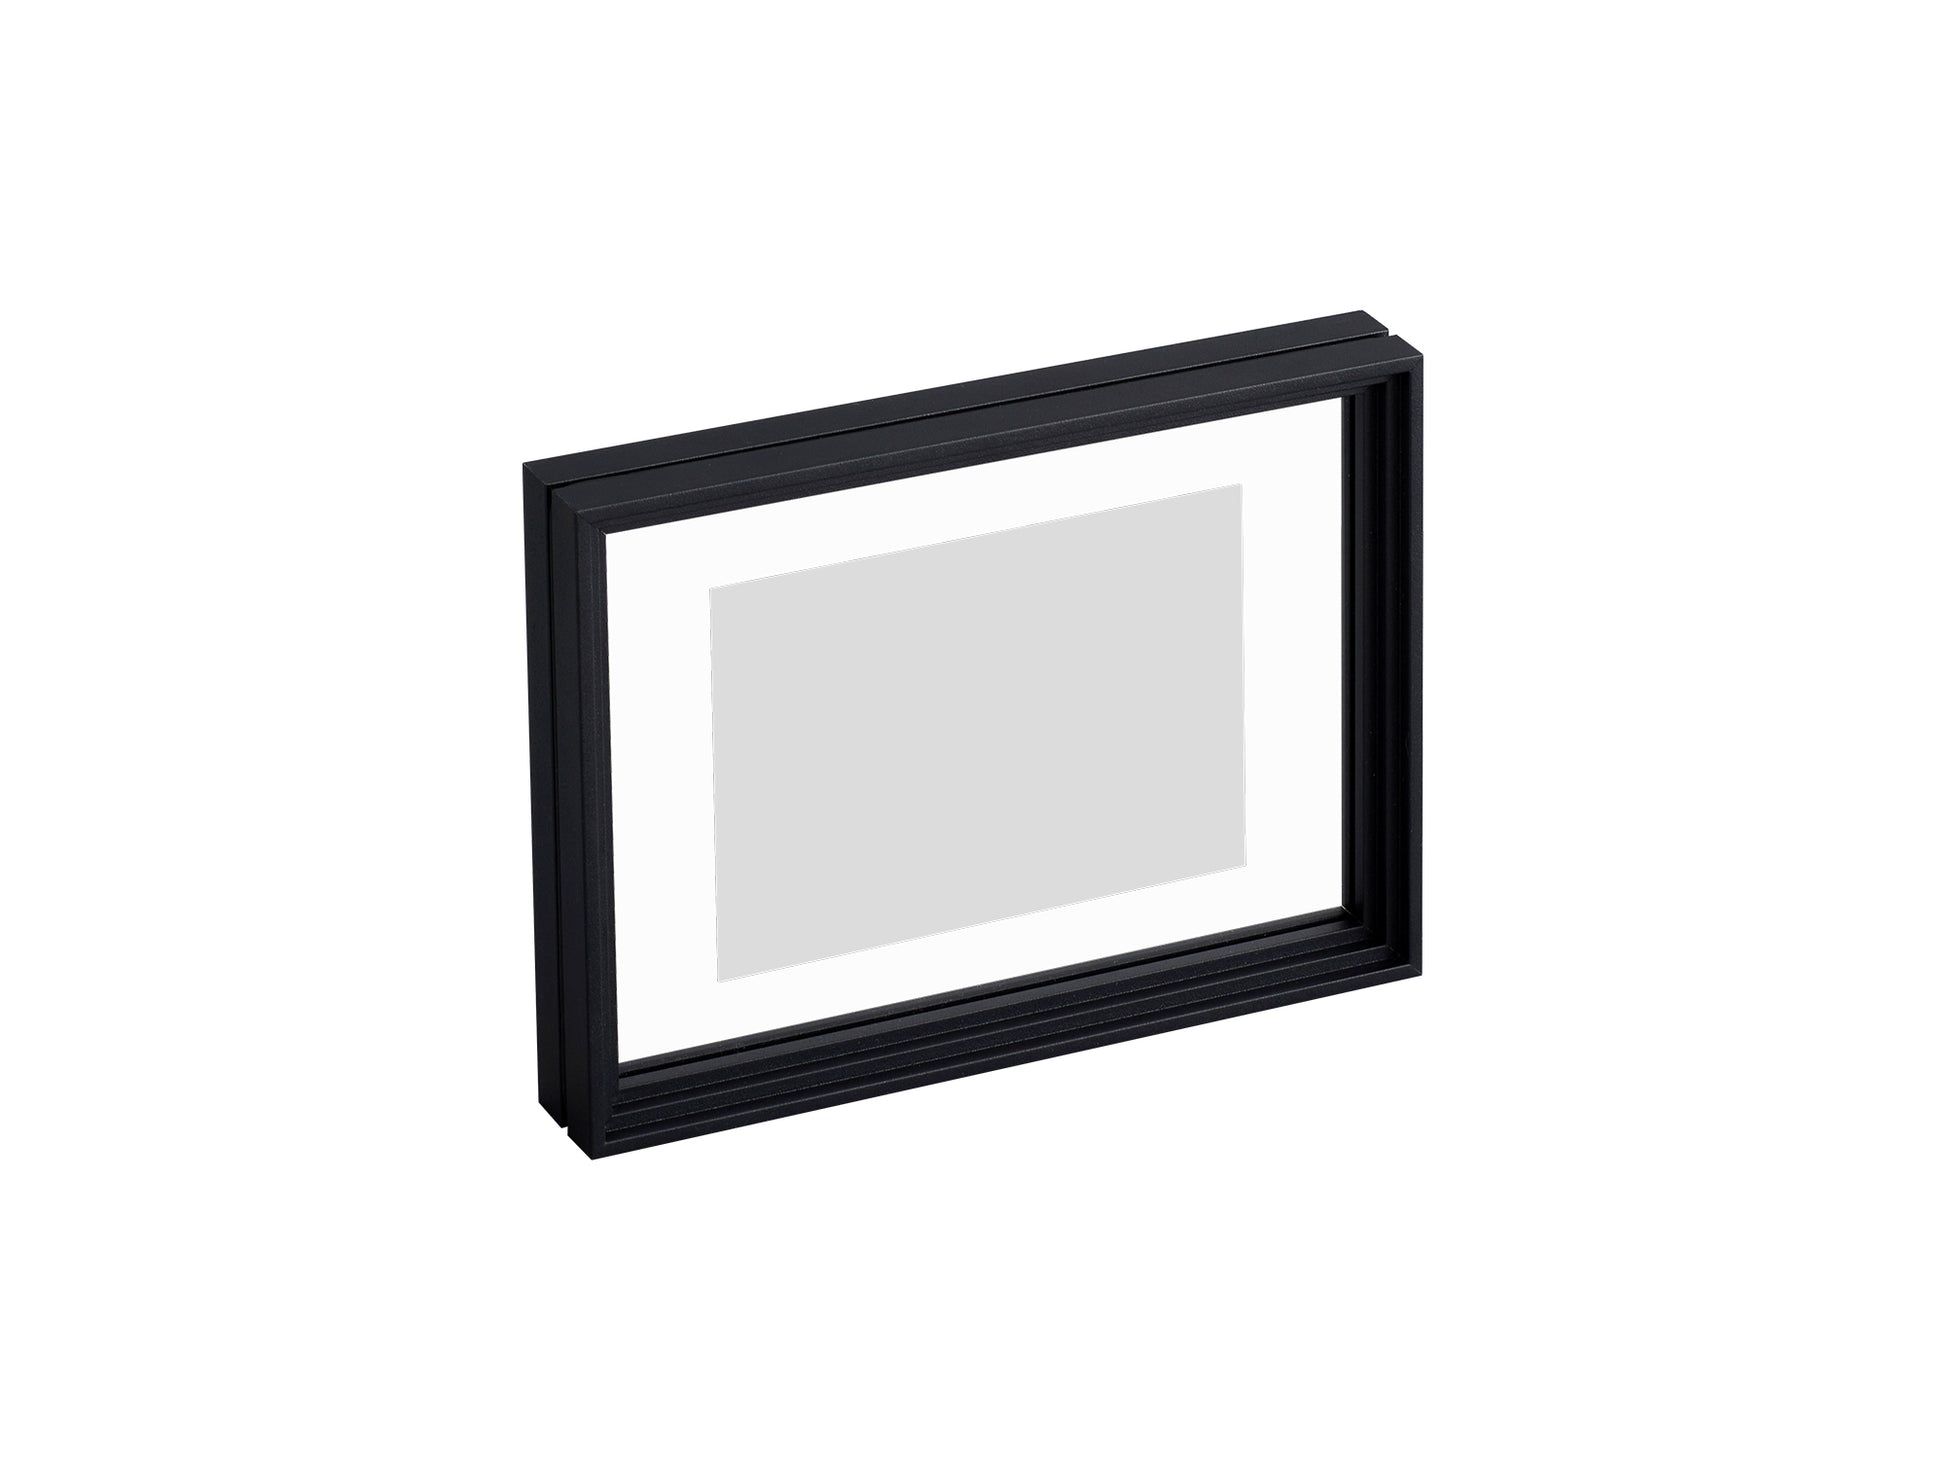 Standing Frame by Moebe - Black Aluminium